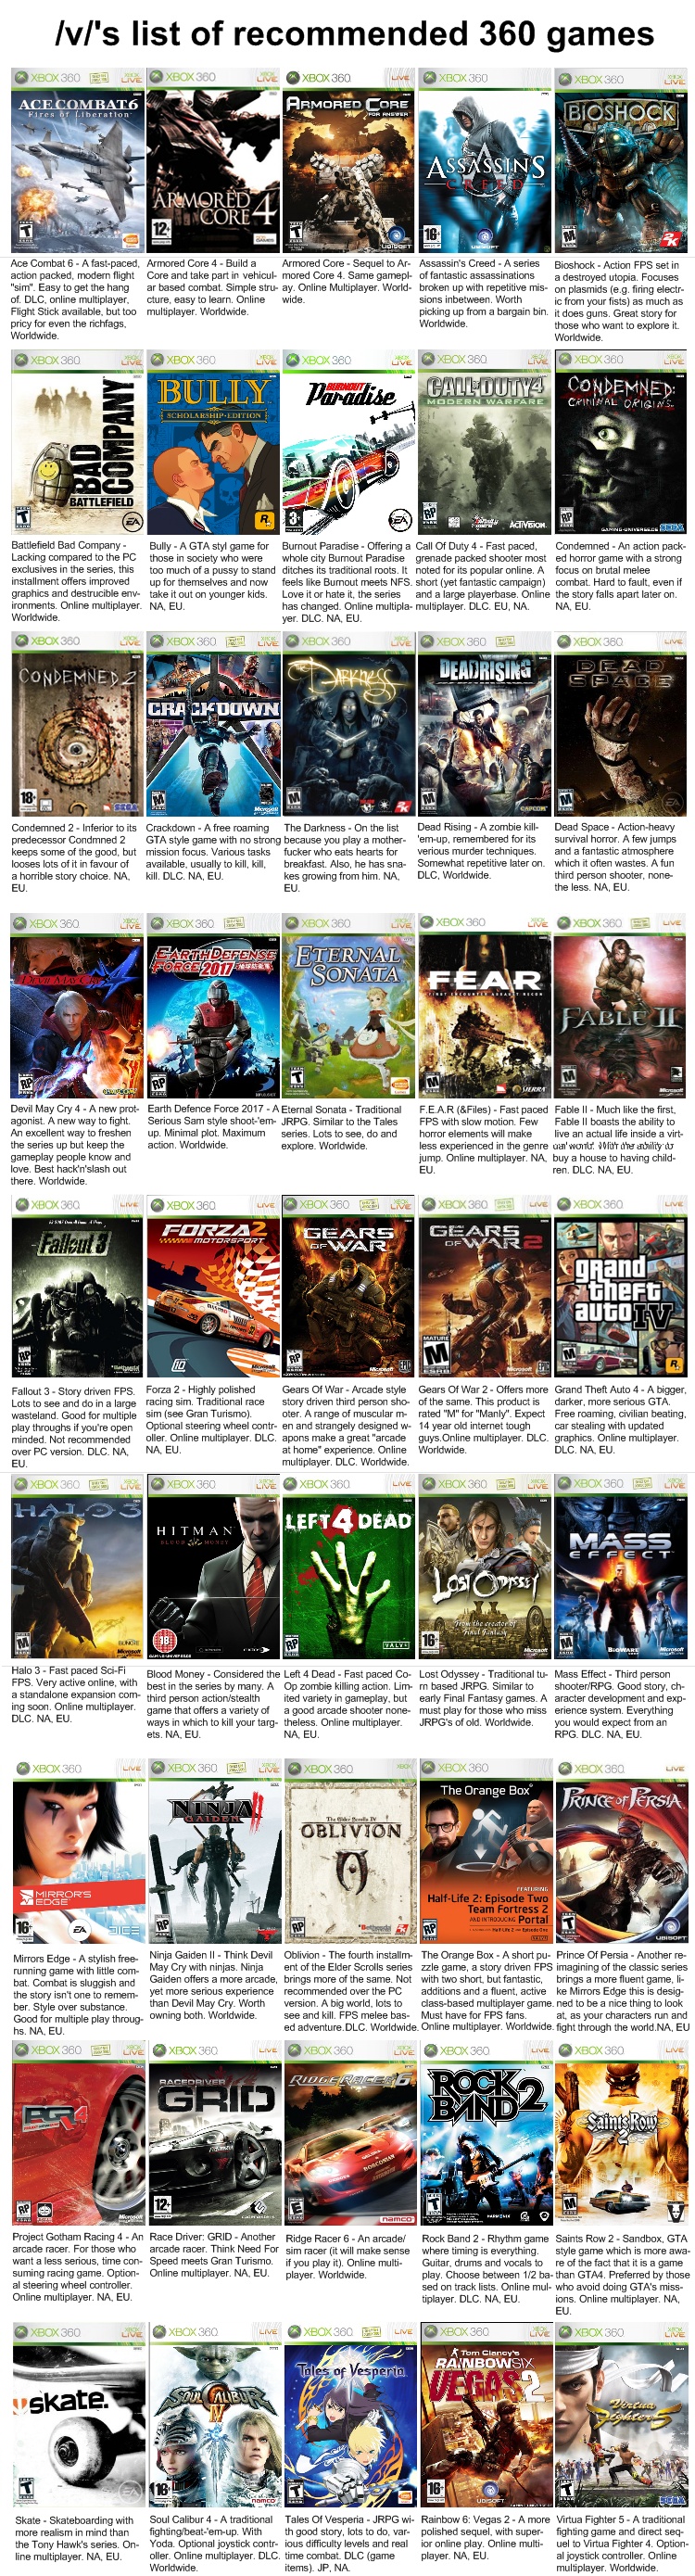 Xbox UK on X: Default 360 Gamerpics: The Definitive Tier List